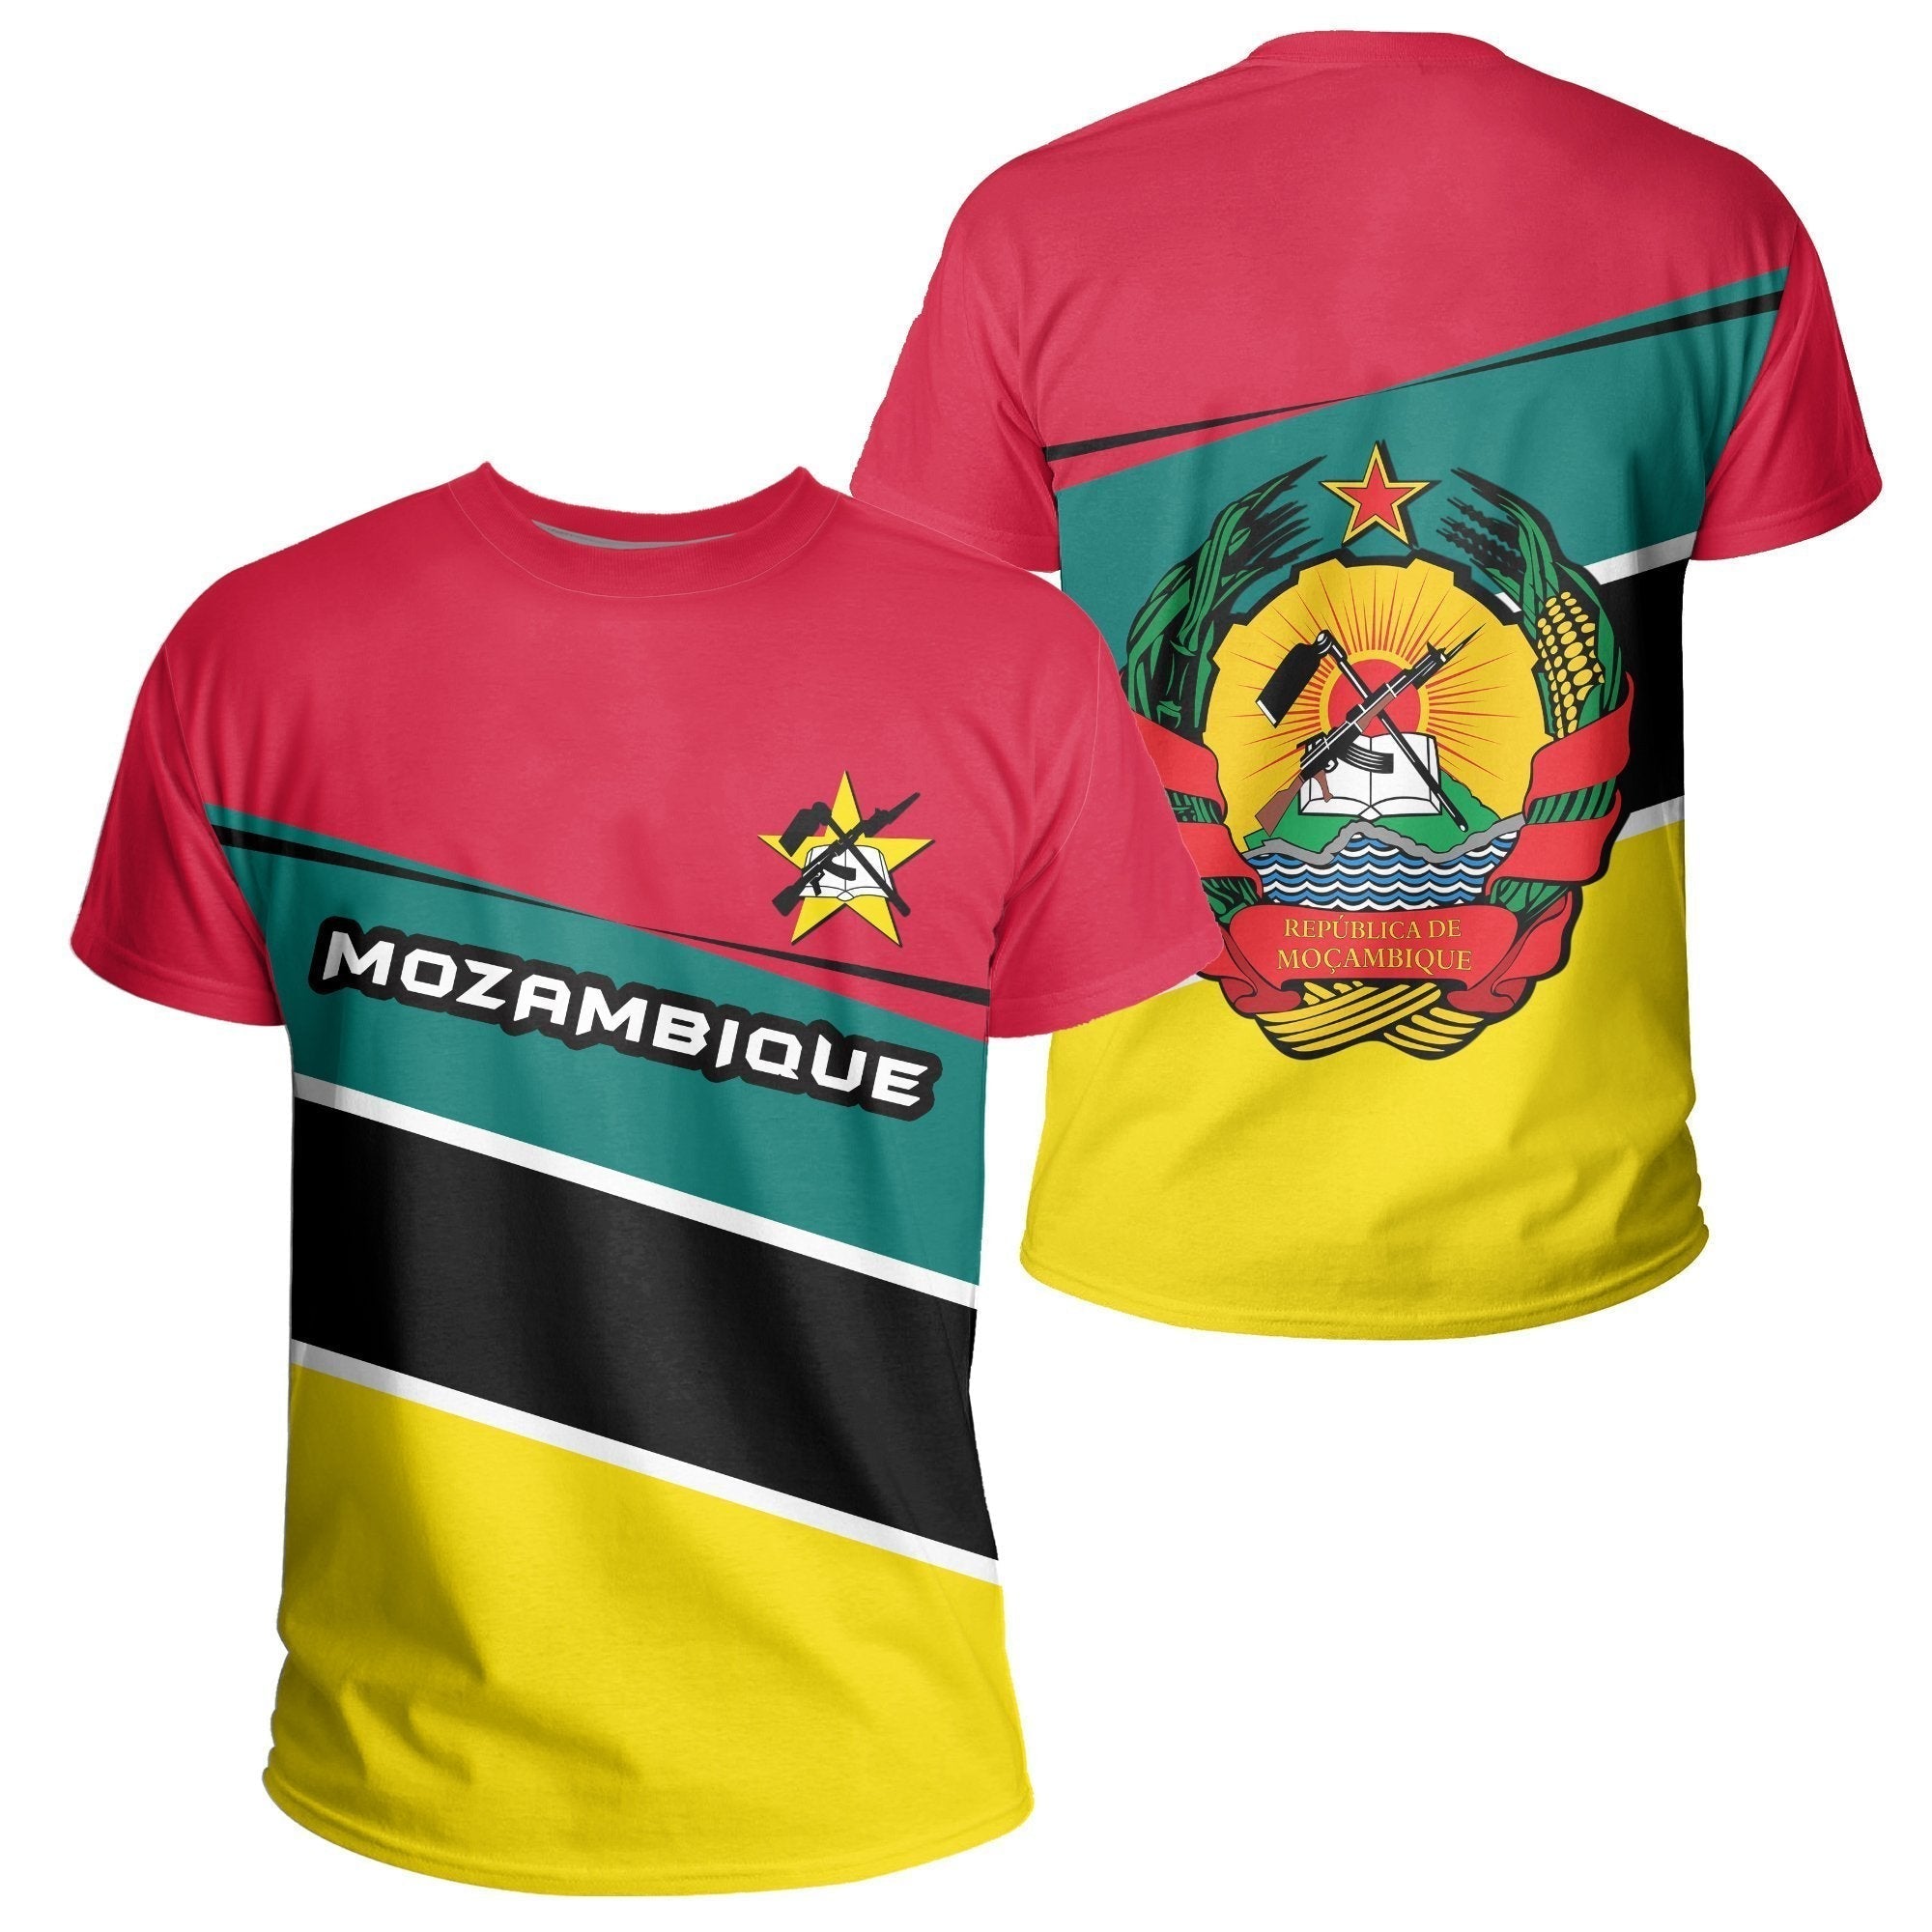 wonder-print-shop-t-shirt-mozambique-vivian-style-tee